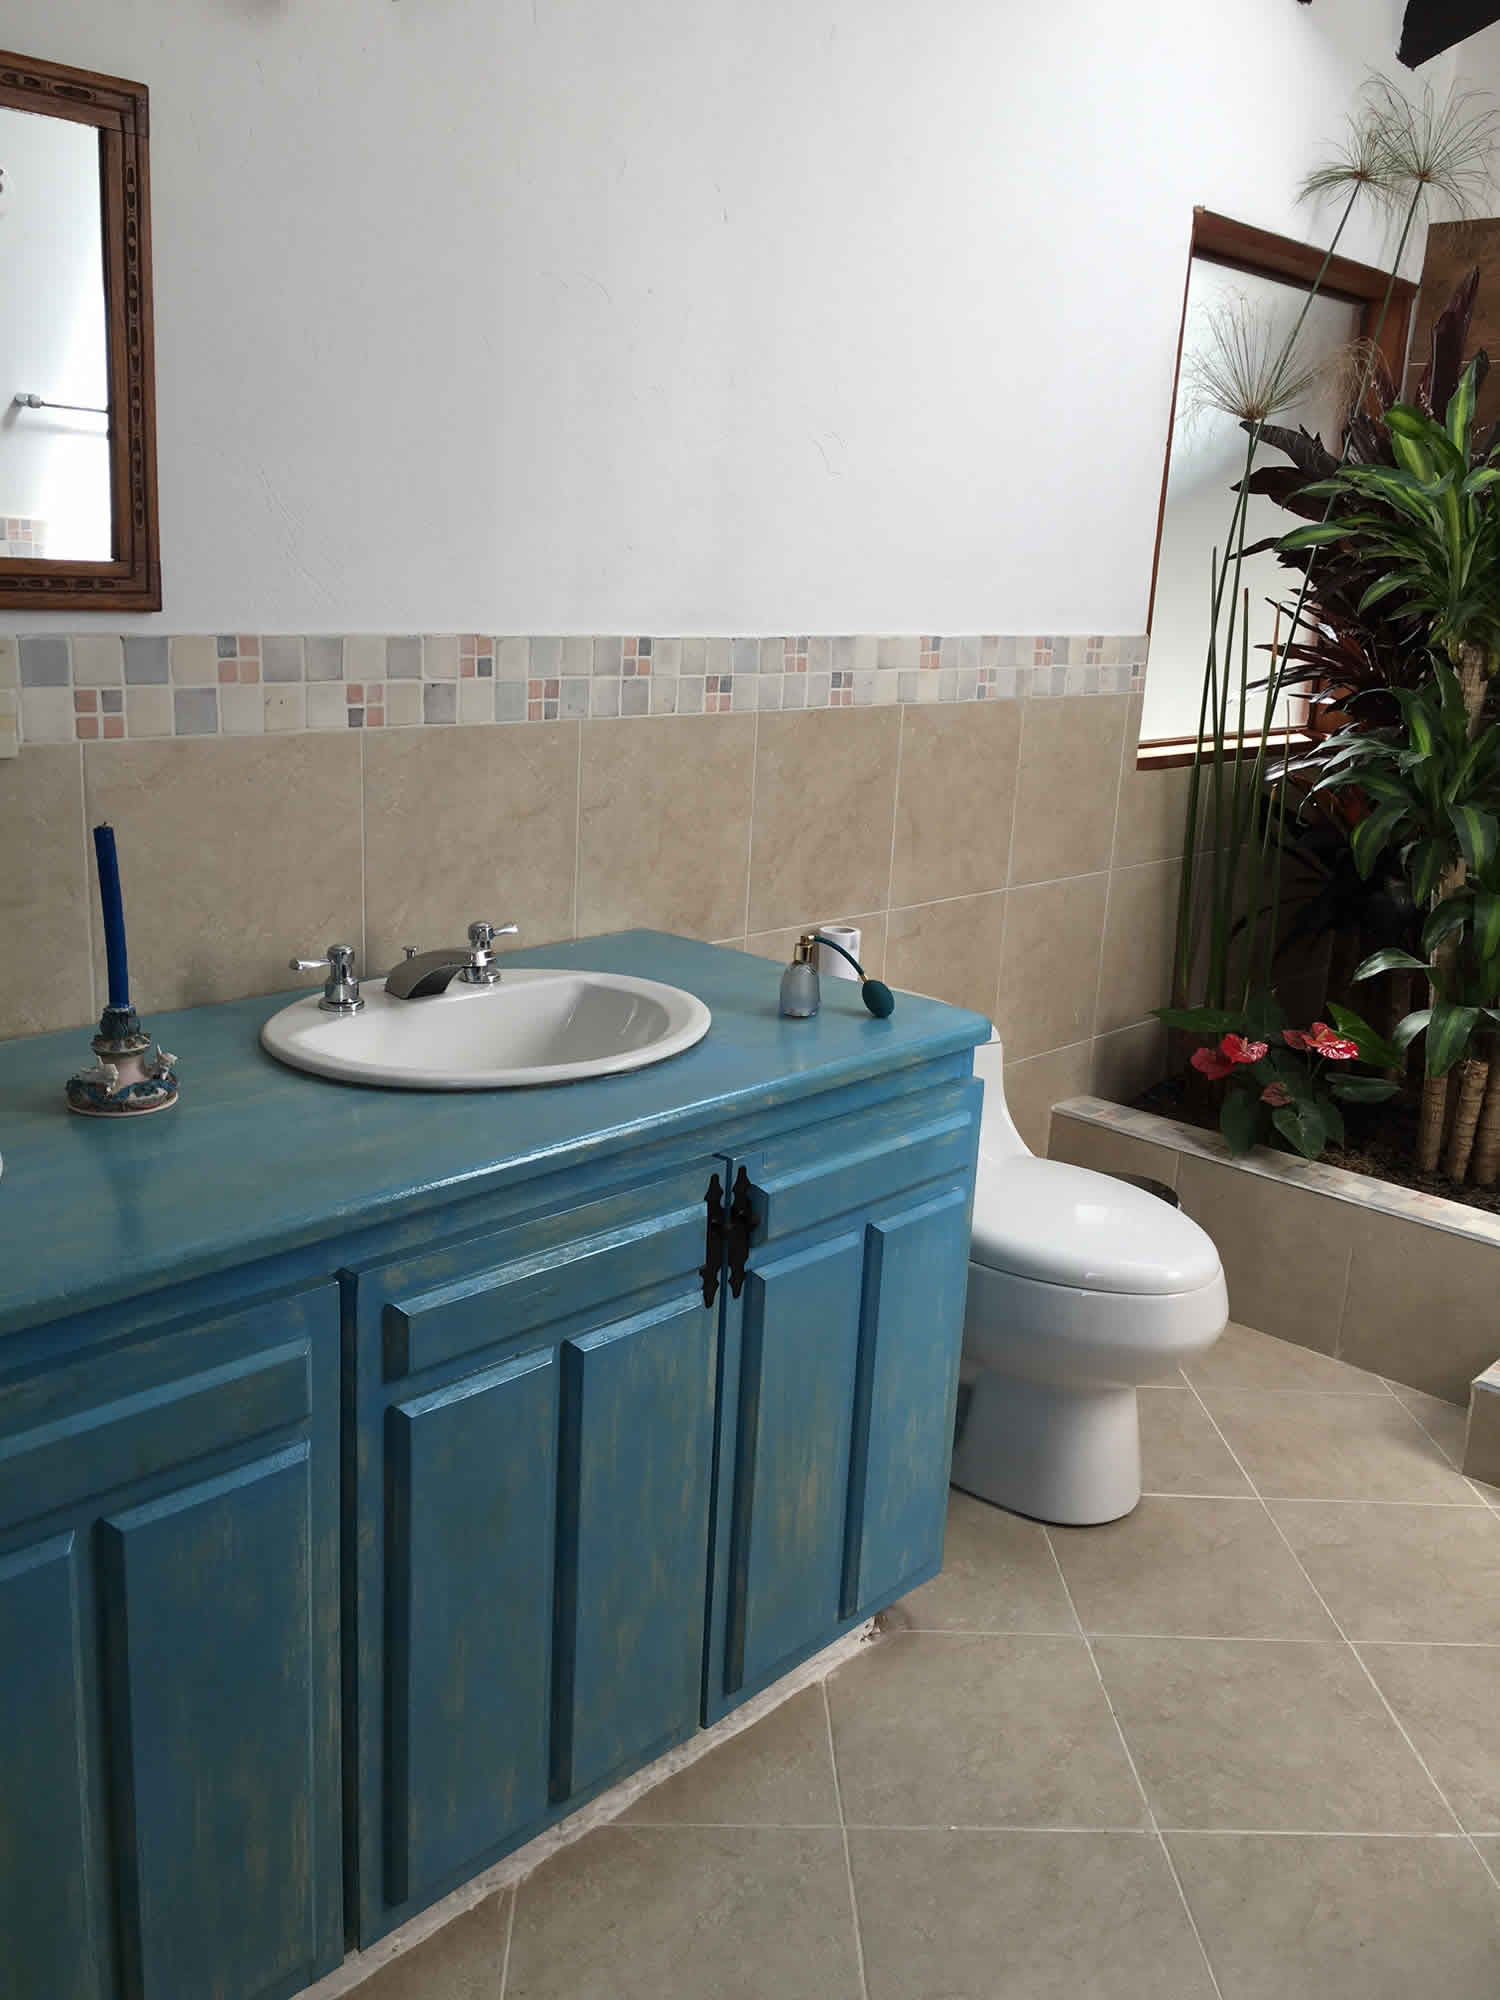 Alquiler Casa Azul en Villa de Leyva baño habitación principal